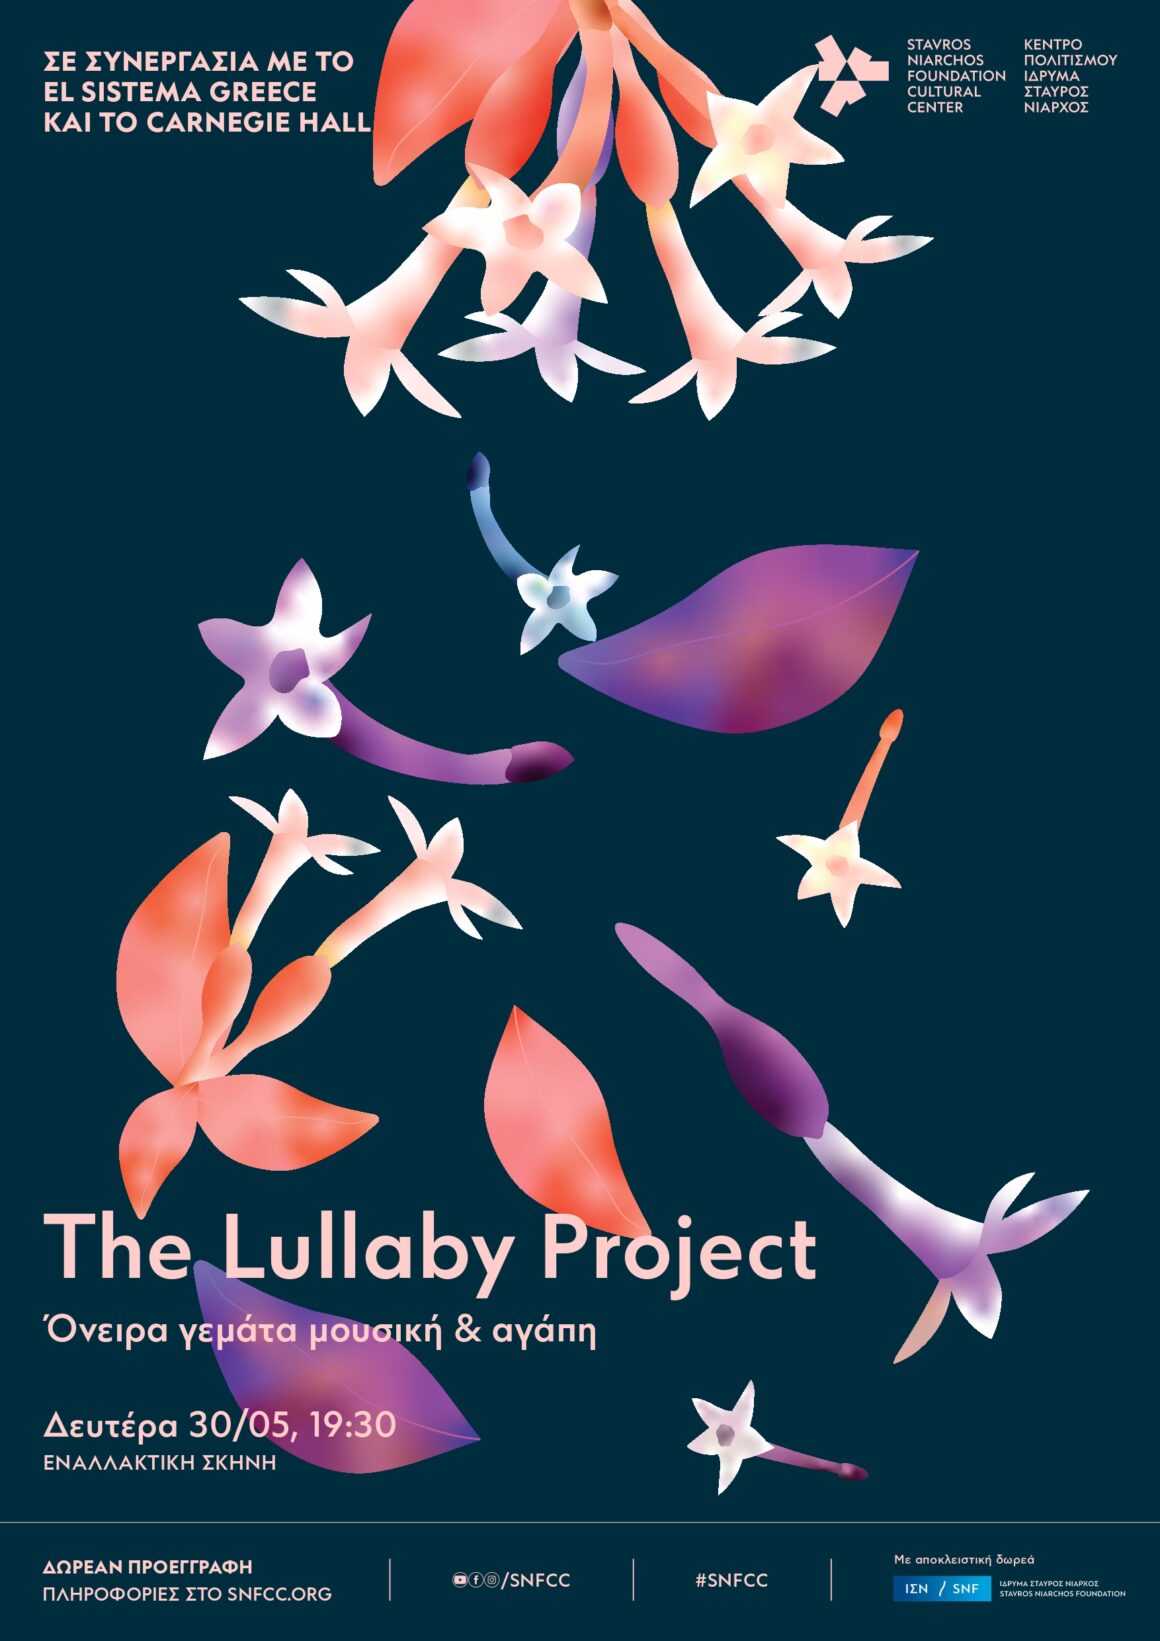 To Lullaby Project επιστρέφει στο Κέντρο Πολιτισμού Ίδρυμα Σταύρος Νιάρχος γιορτάζοντας καθολικά την αγάπη για τα παιδιά